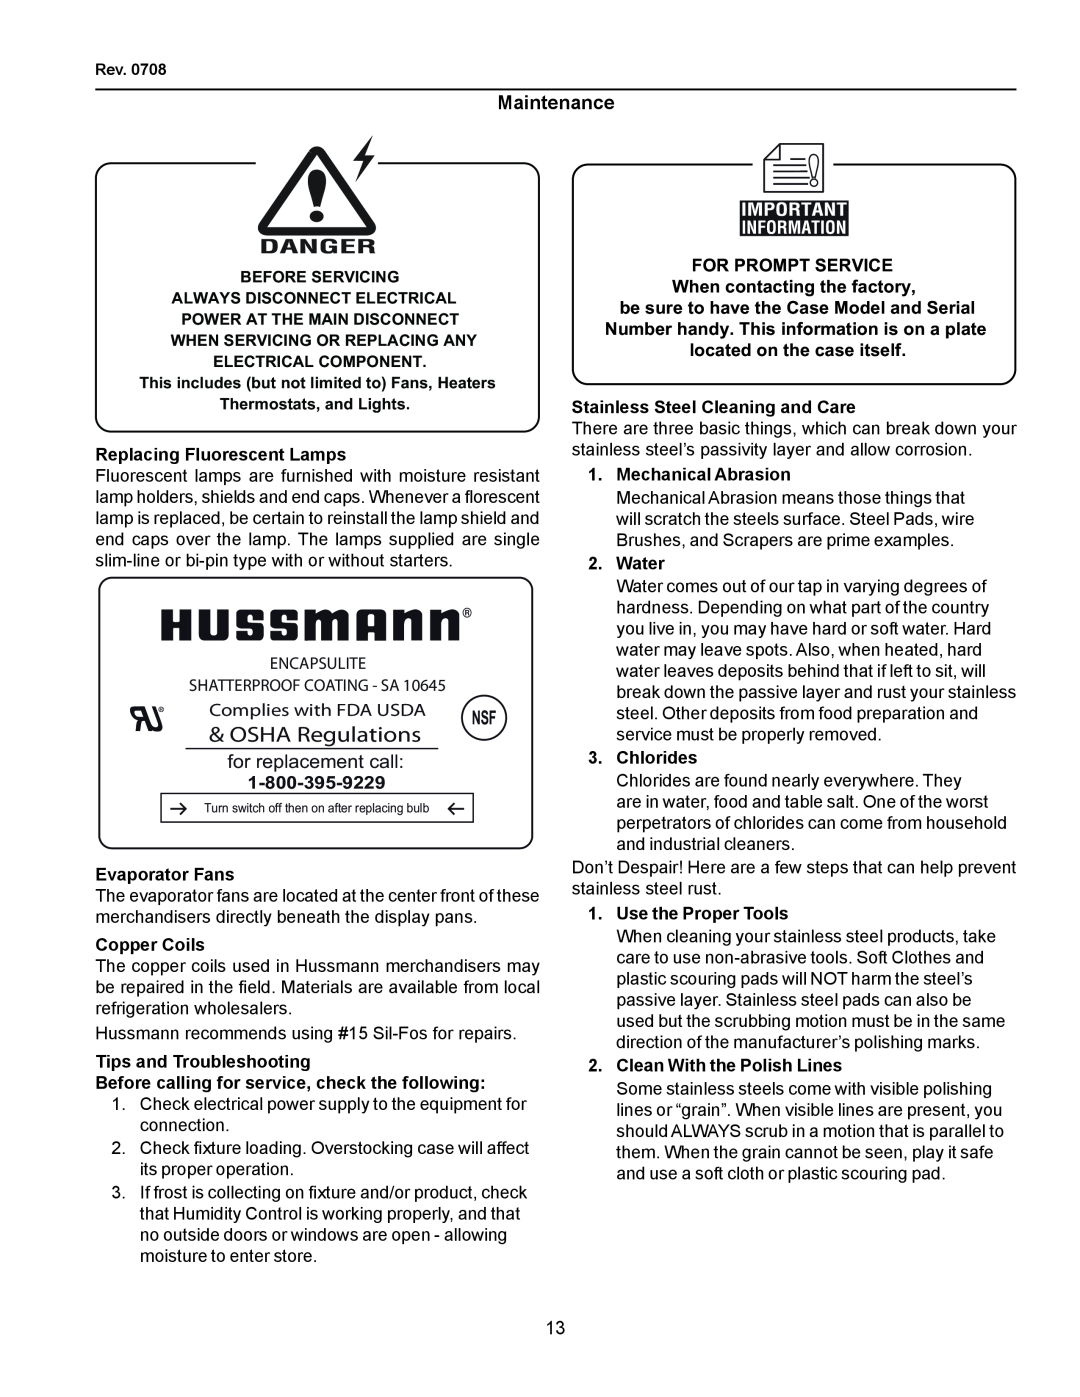 hussman FMSS-L Maintenance, OSHA Regulations, Replacing Fluorescent Lamps, Encapsulite Shatterproof Coating - Sa, Water 